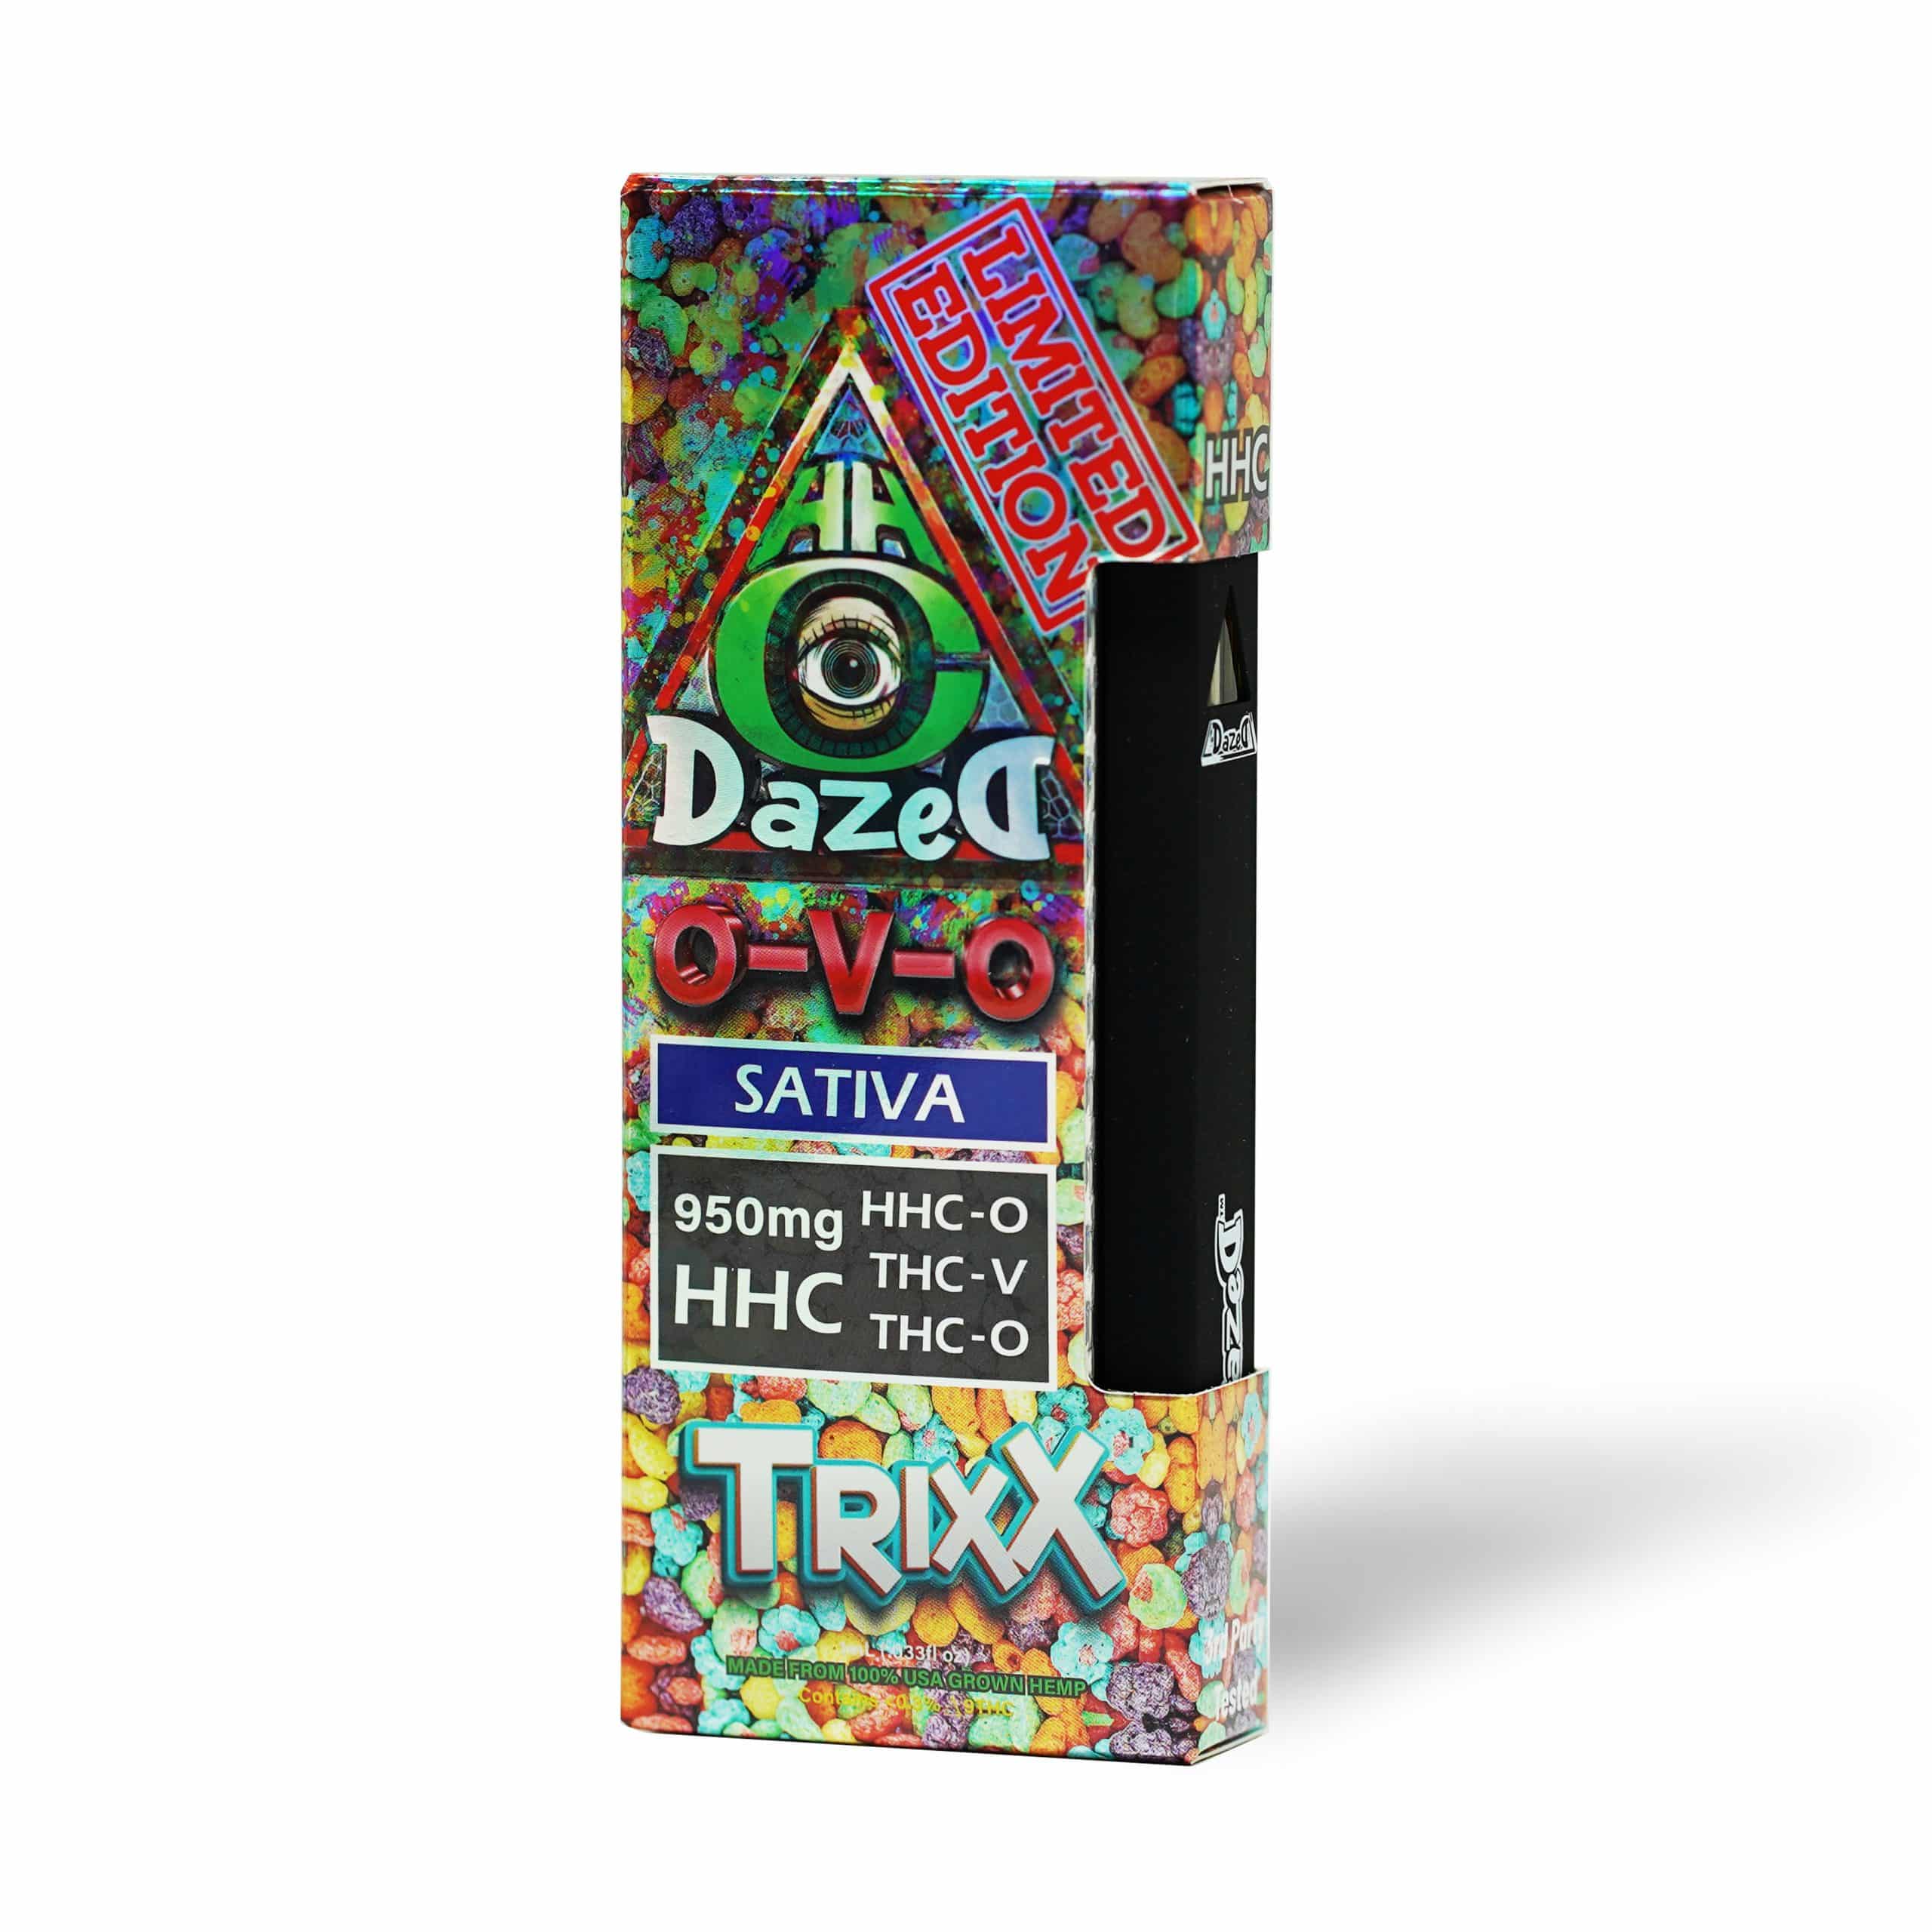 DazeD8 Trixx HHC-O + THCV + THC-O Disposable (1g) Best Price